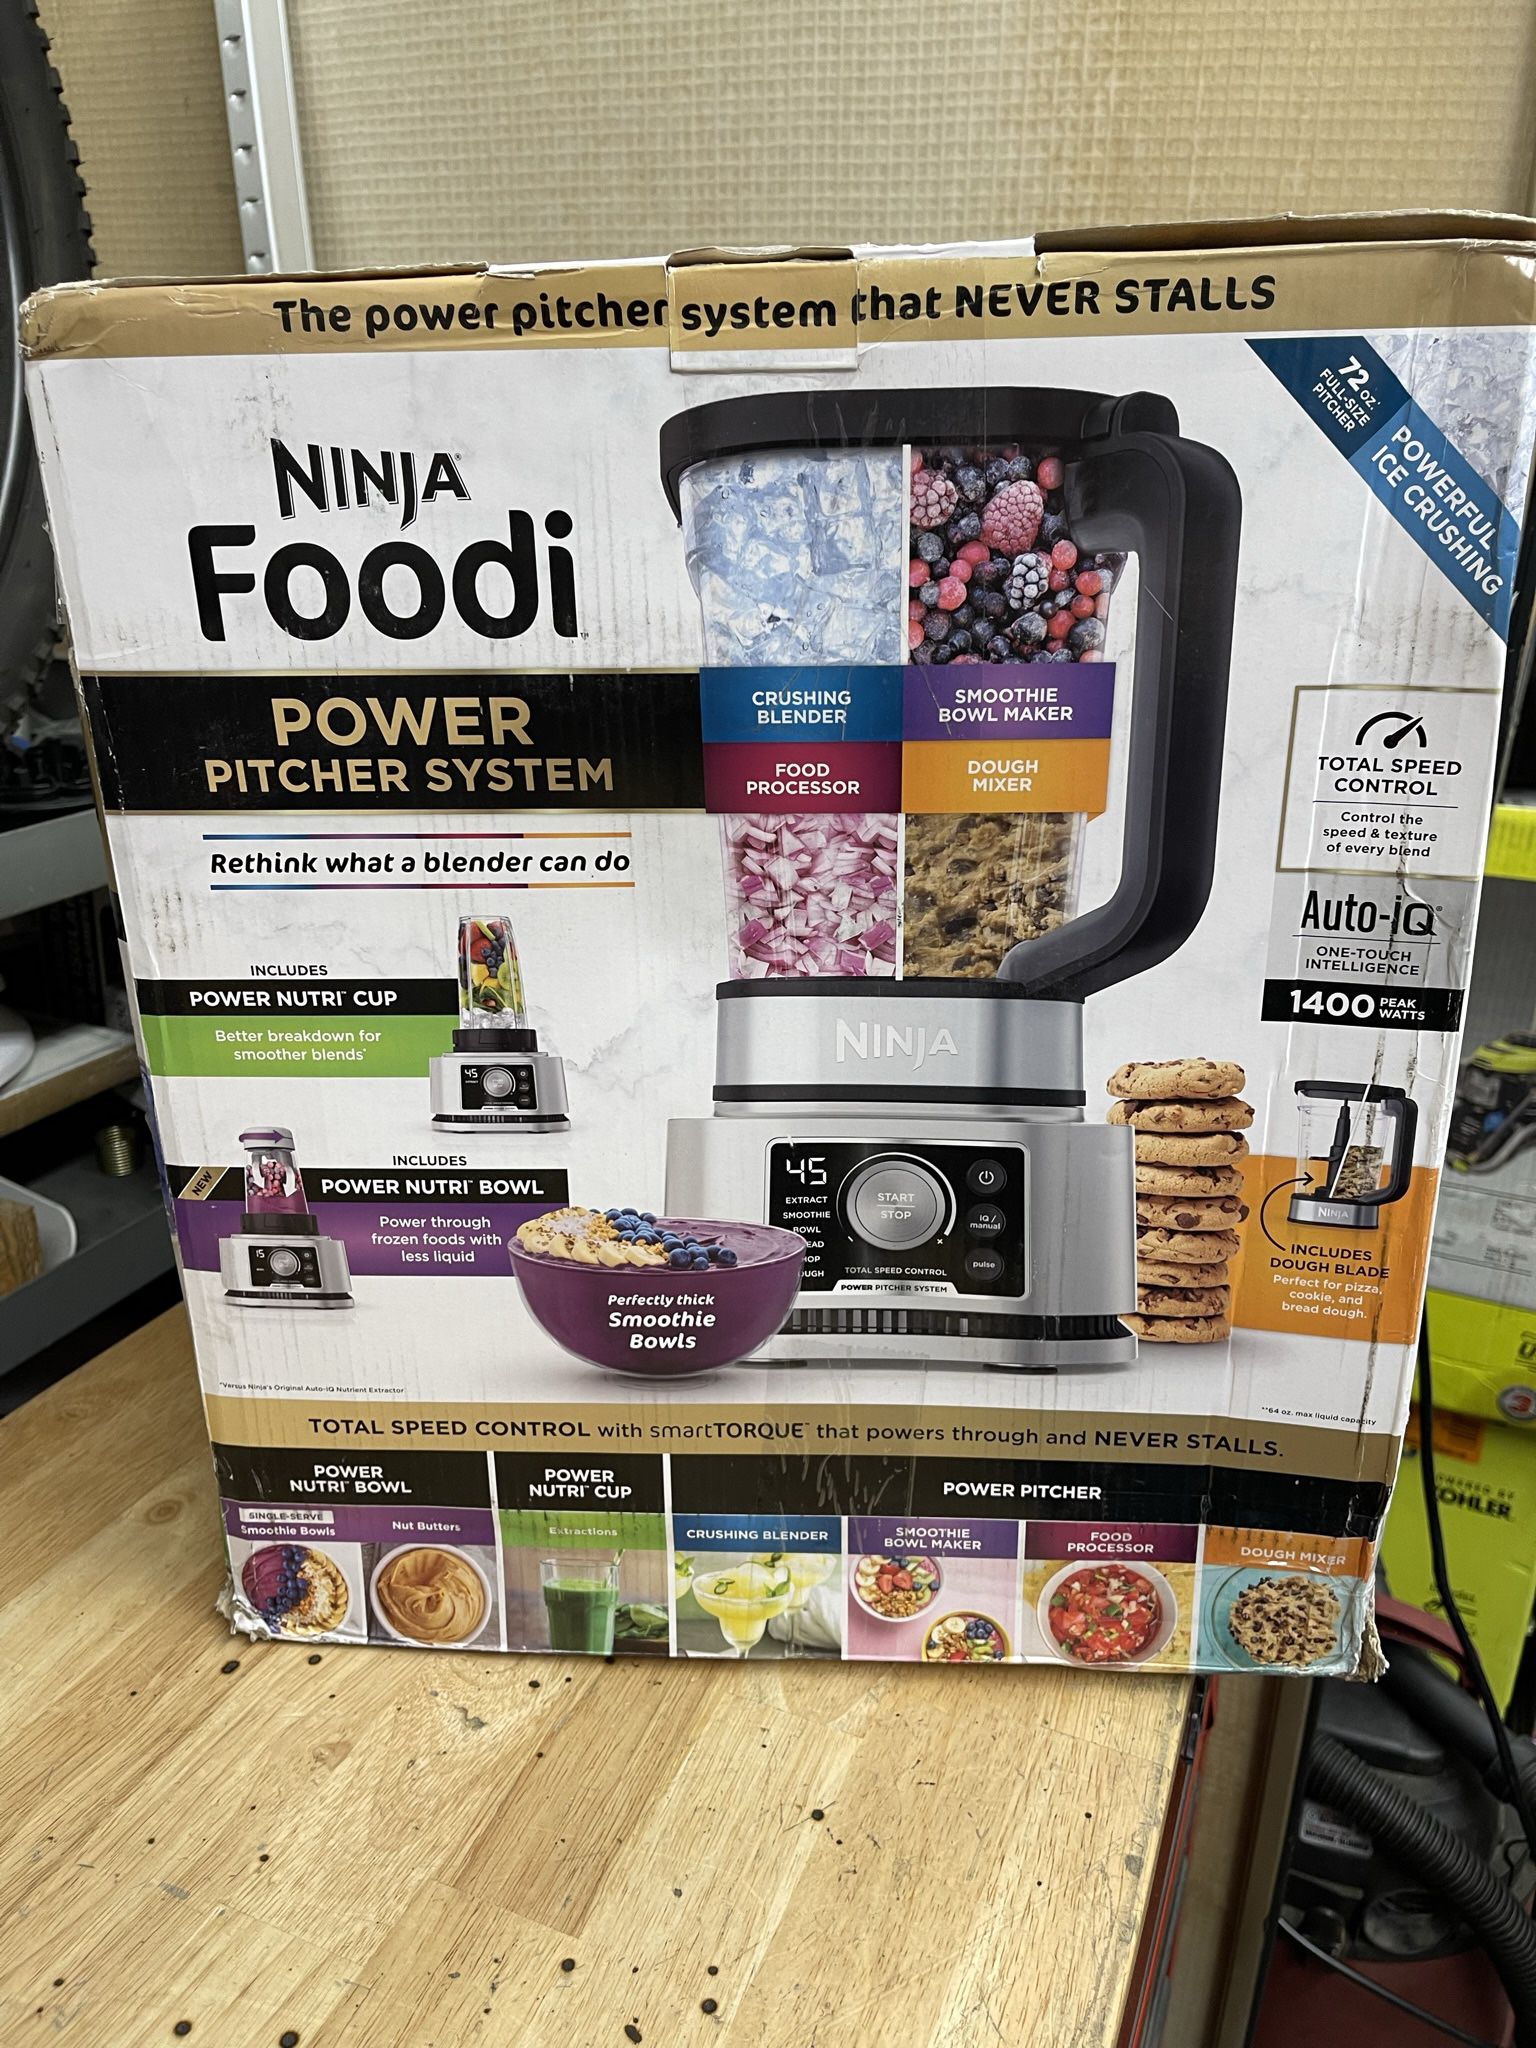 Ninja Foodi Power Pitcher system on sale at